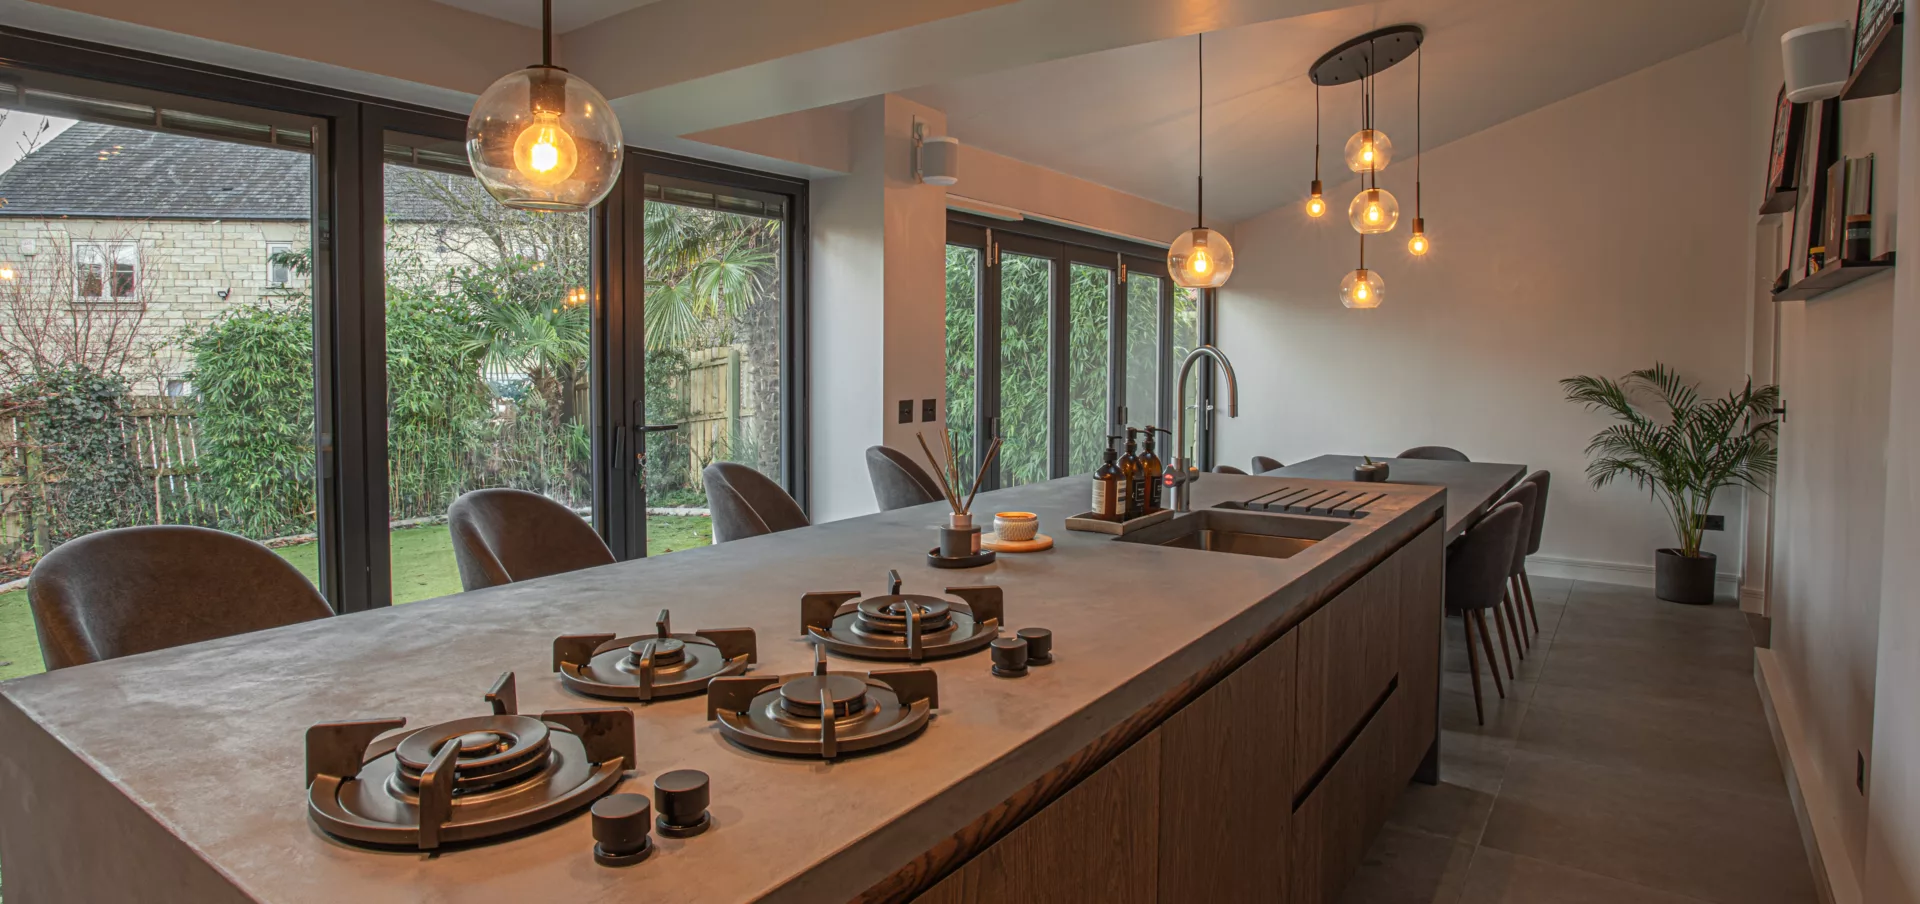 Bespoke Industrial feel, scandinavian style kitchen created by Infinite Bespoke Interiors.